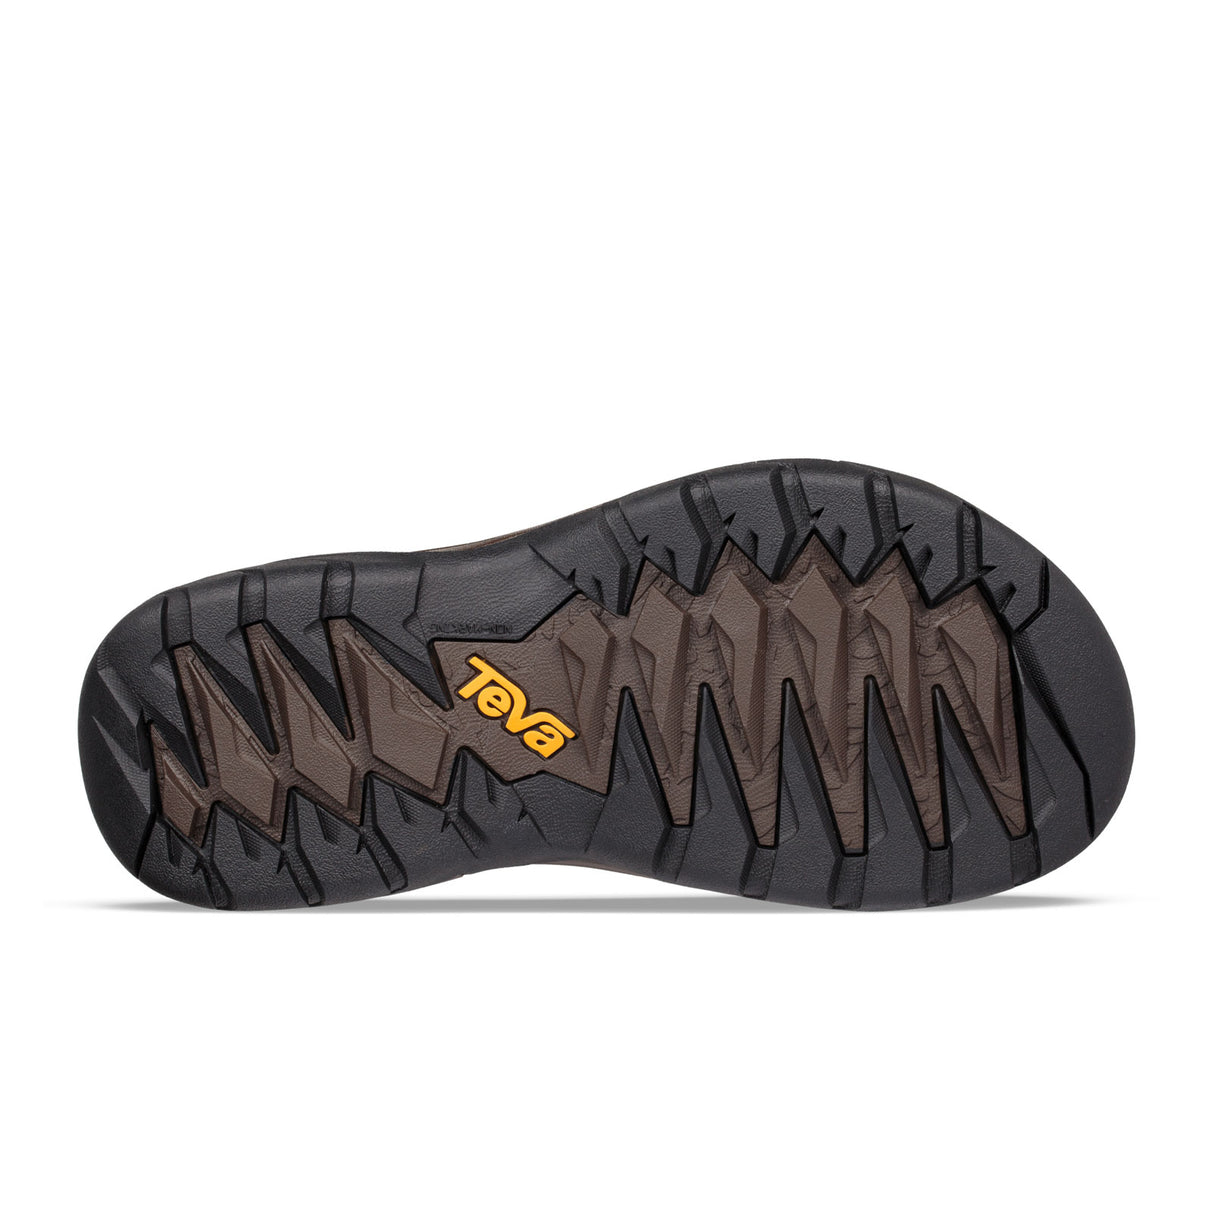 Teva Terra Fi 5 Universal Leather Active Sandal (Men) - Turkish Coffee Sandals - Active - The Heel Shoe Fitters